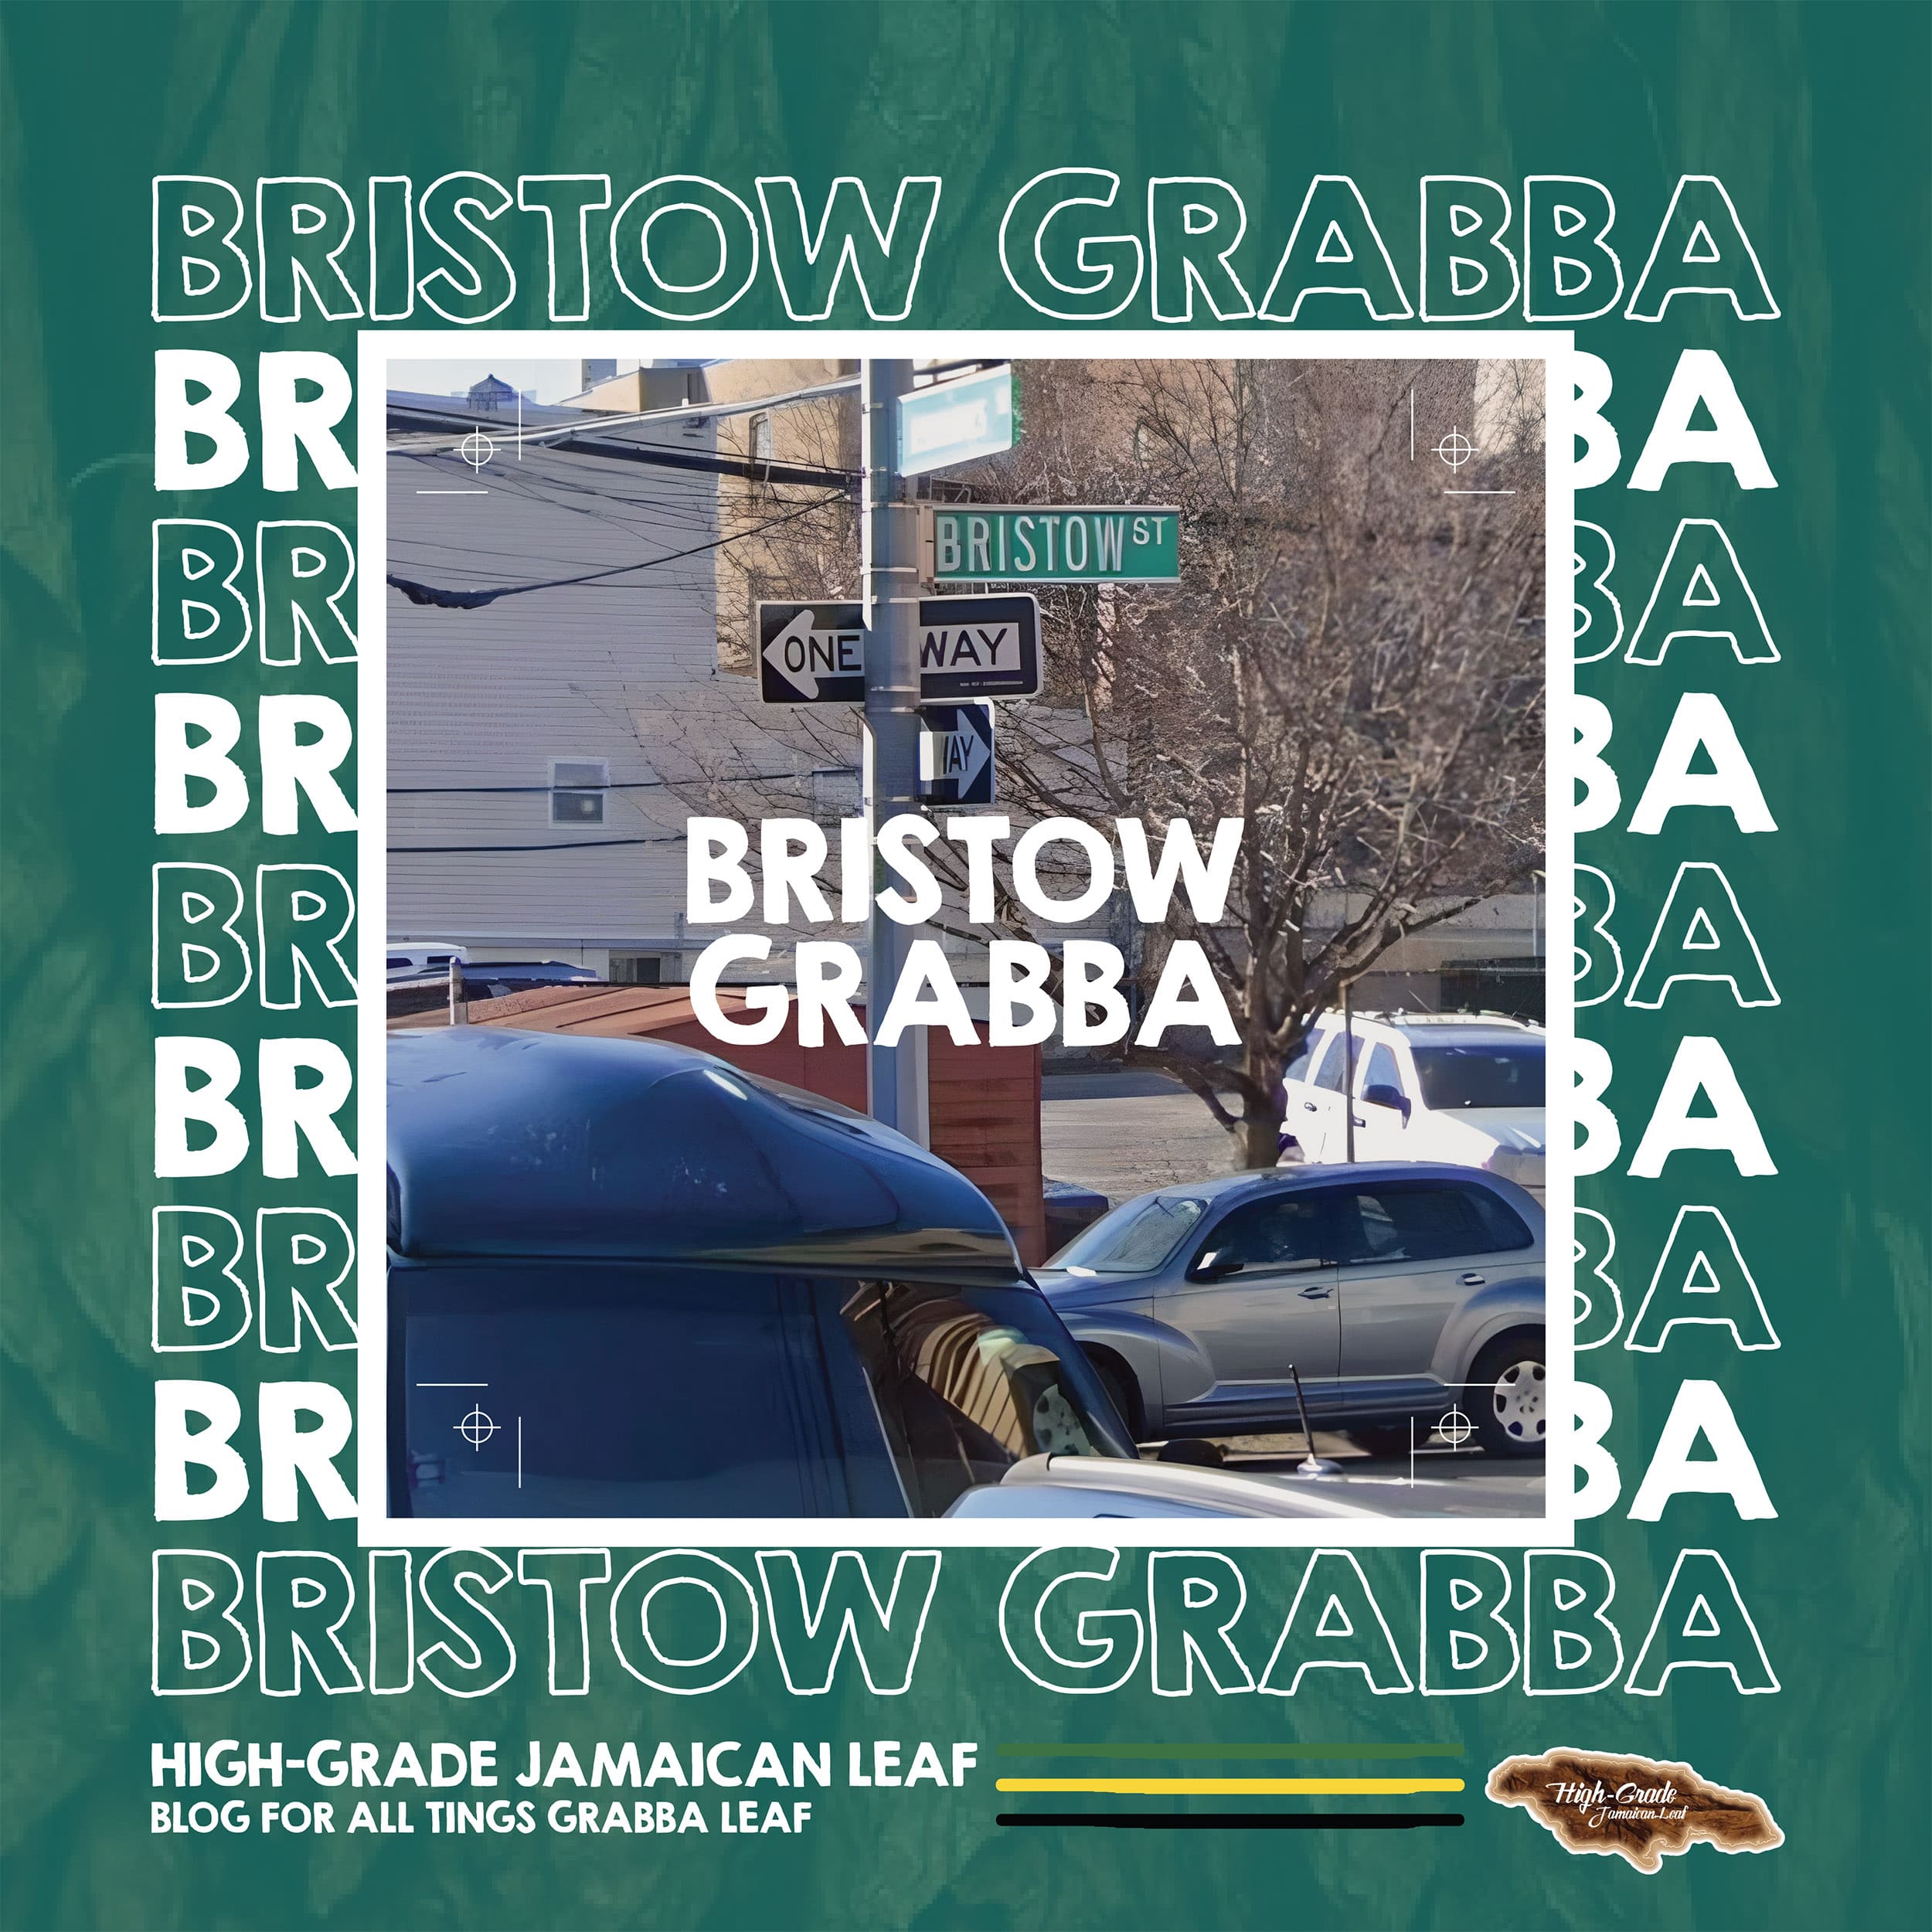 Bristow Grabba